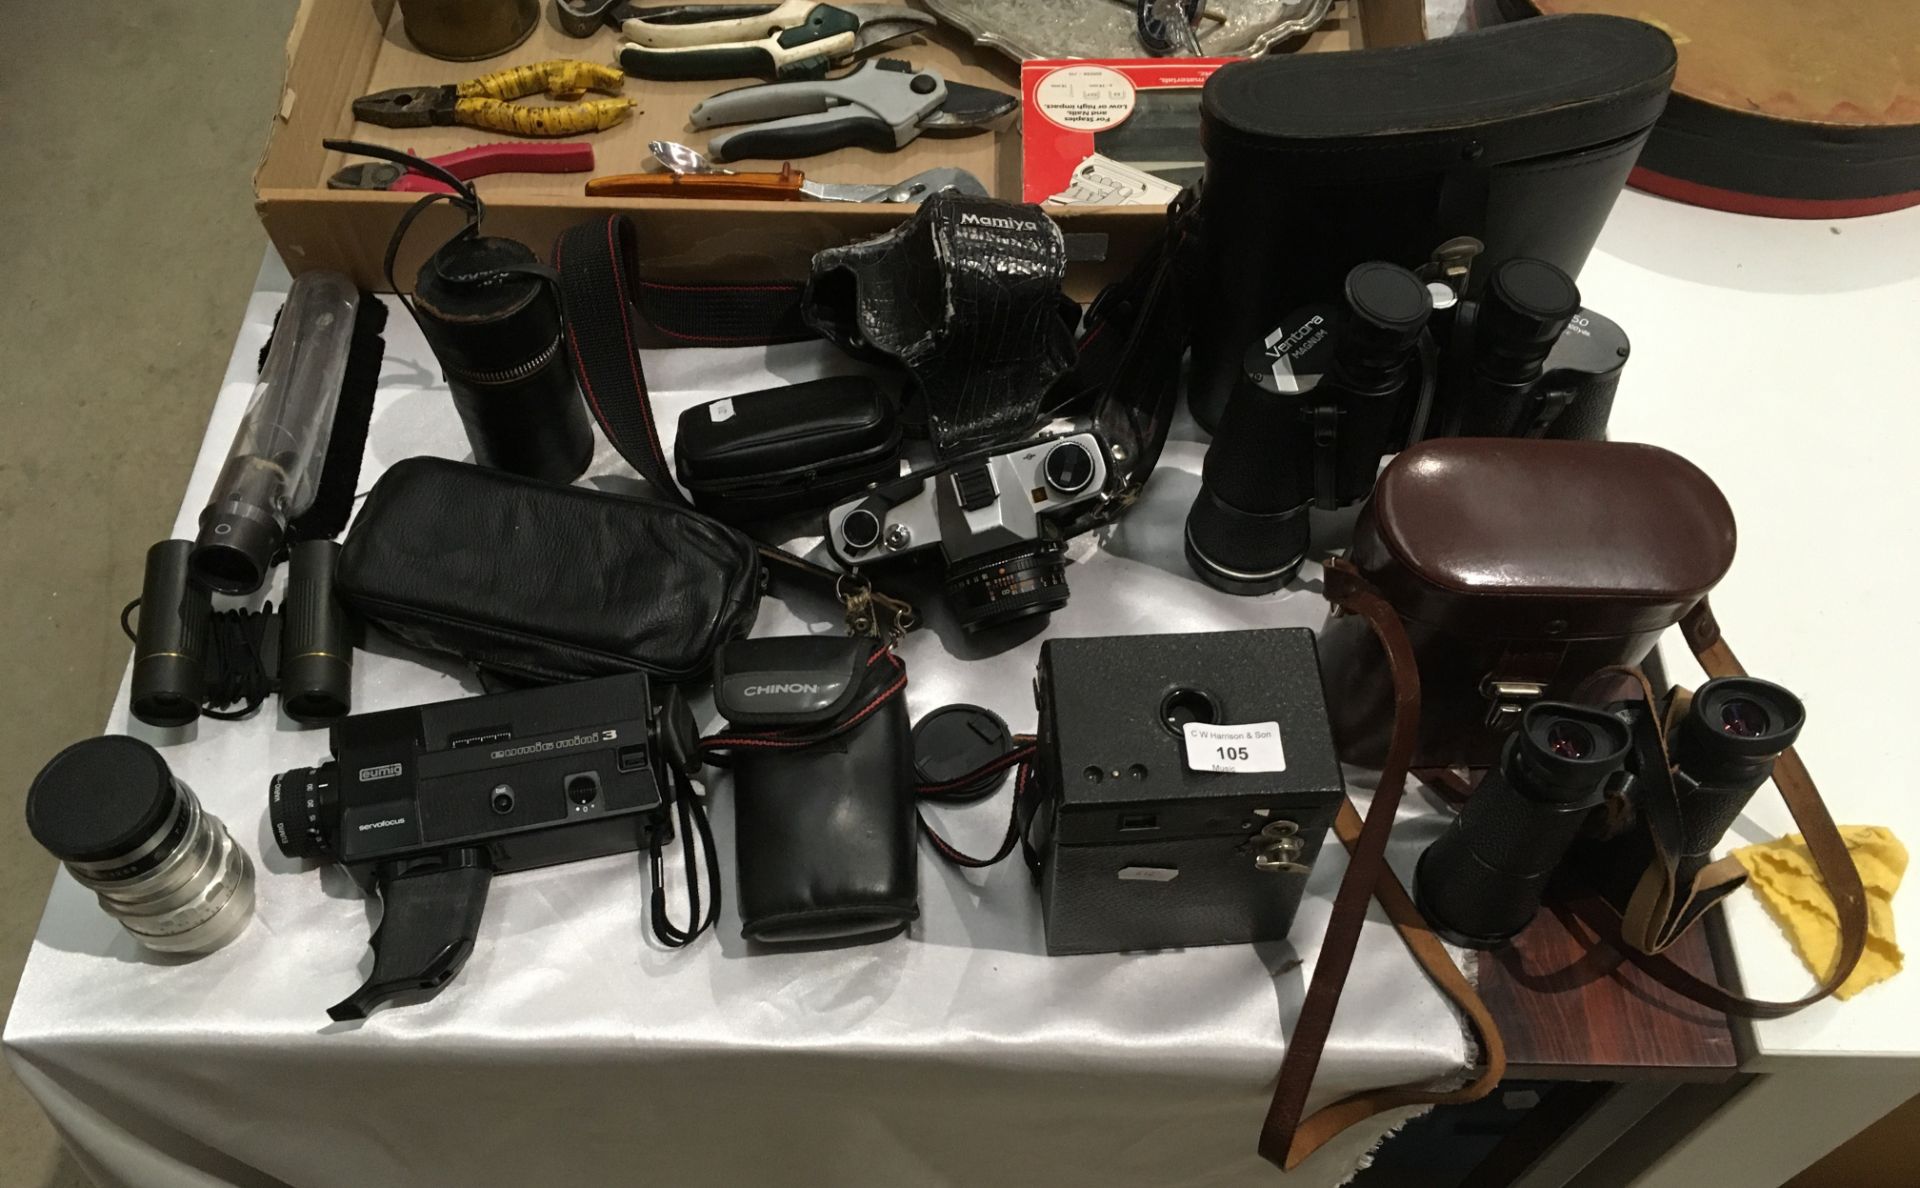 Pair of Ventora Magnum binoculars, pair of Carl Zeiss binoculars, Mamiya NC1000 camera,